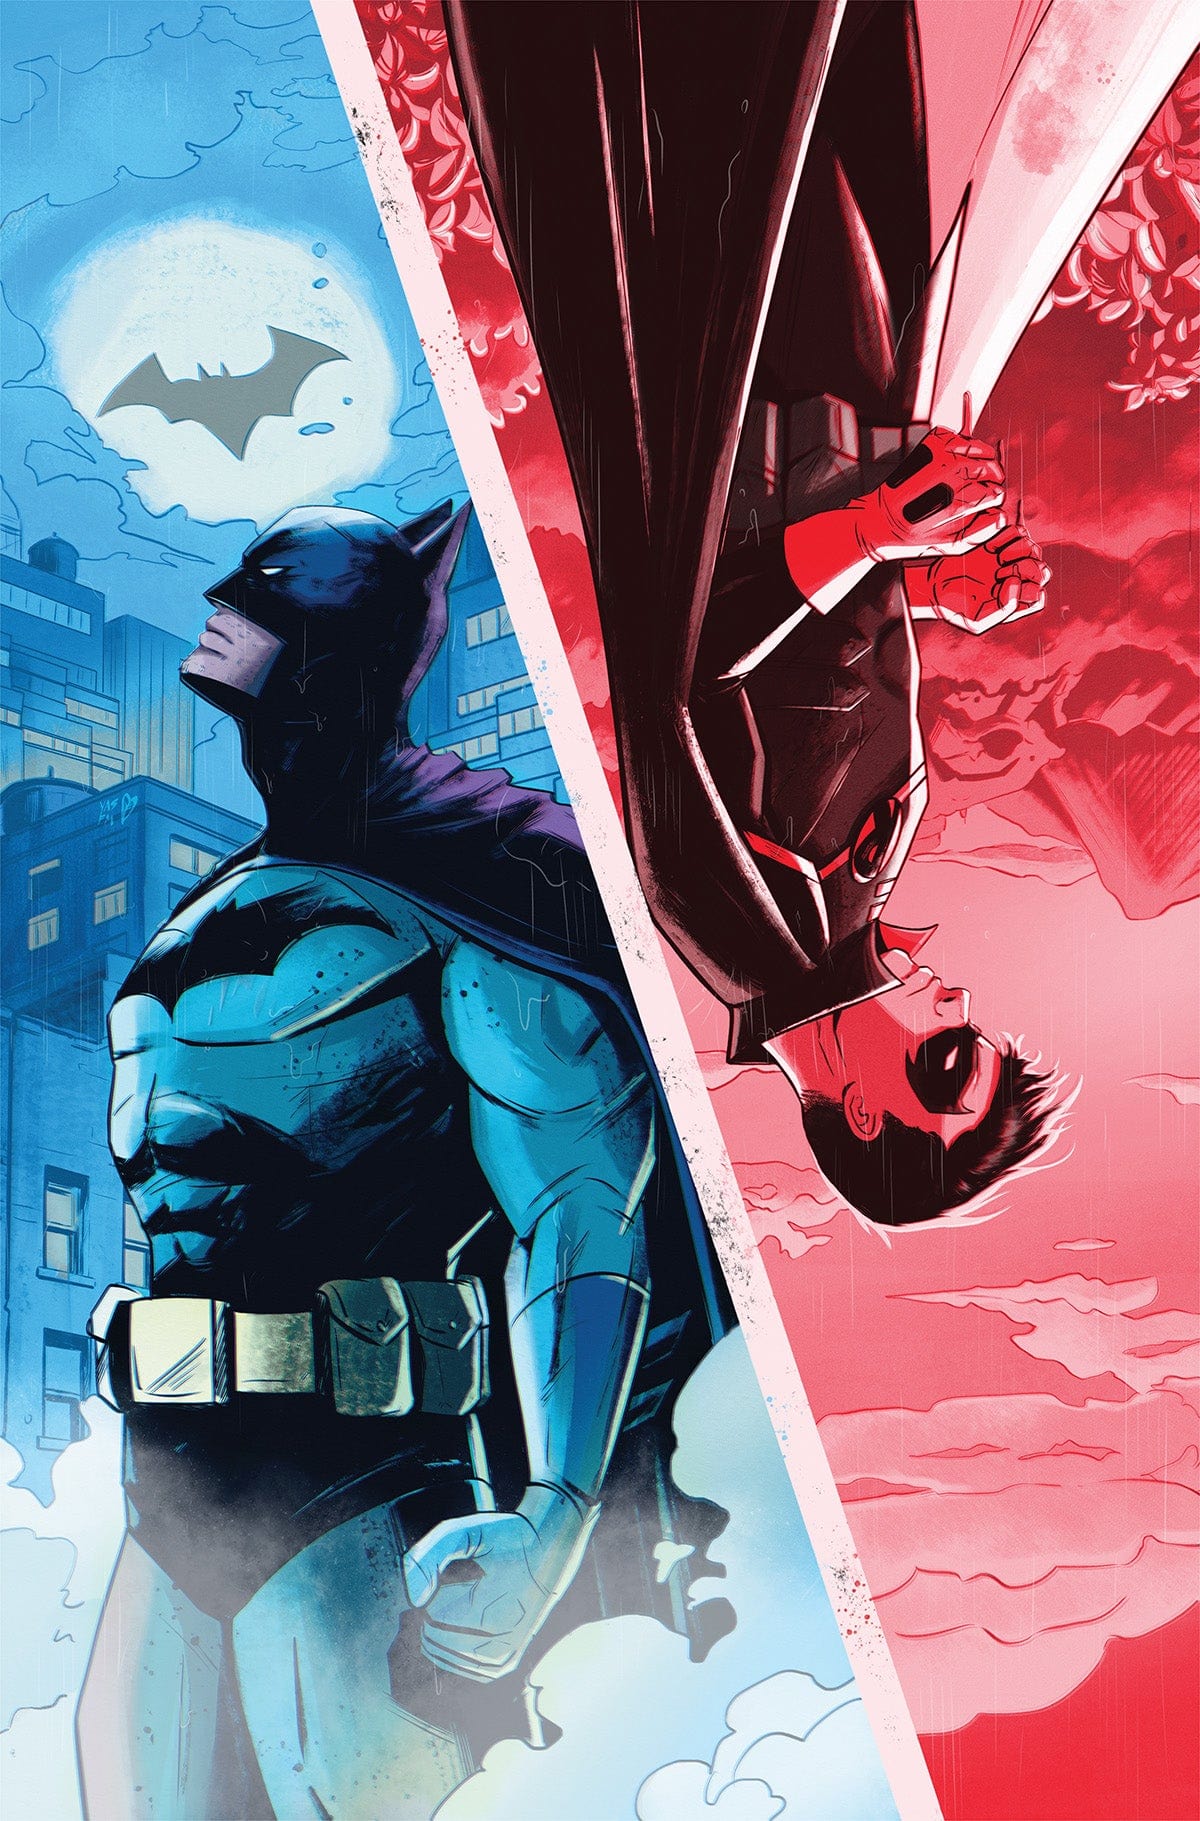 Expectativas para Batman vs Superman, by Rafael Barreto